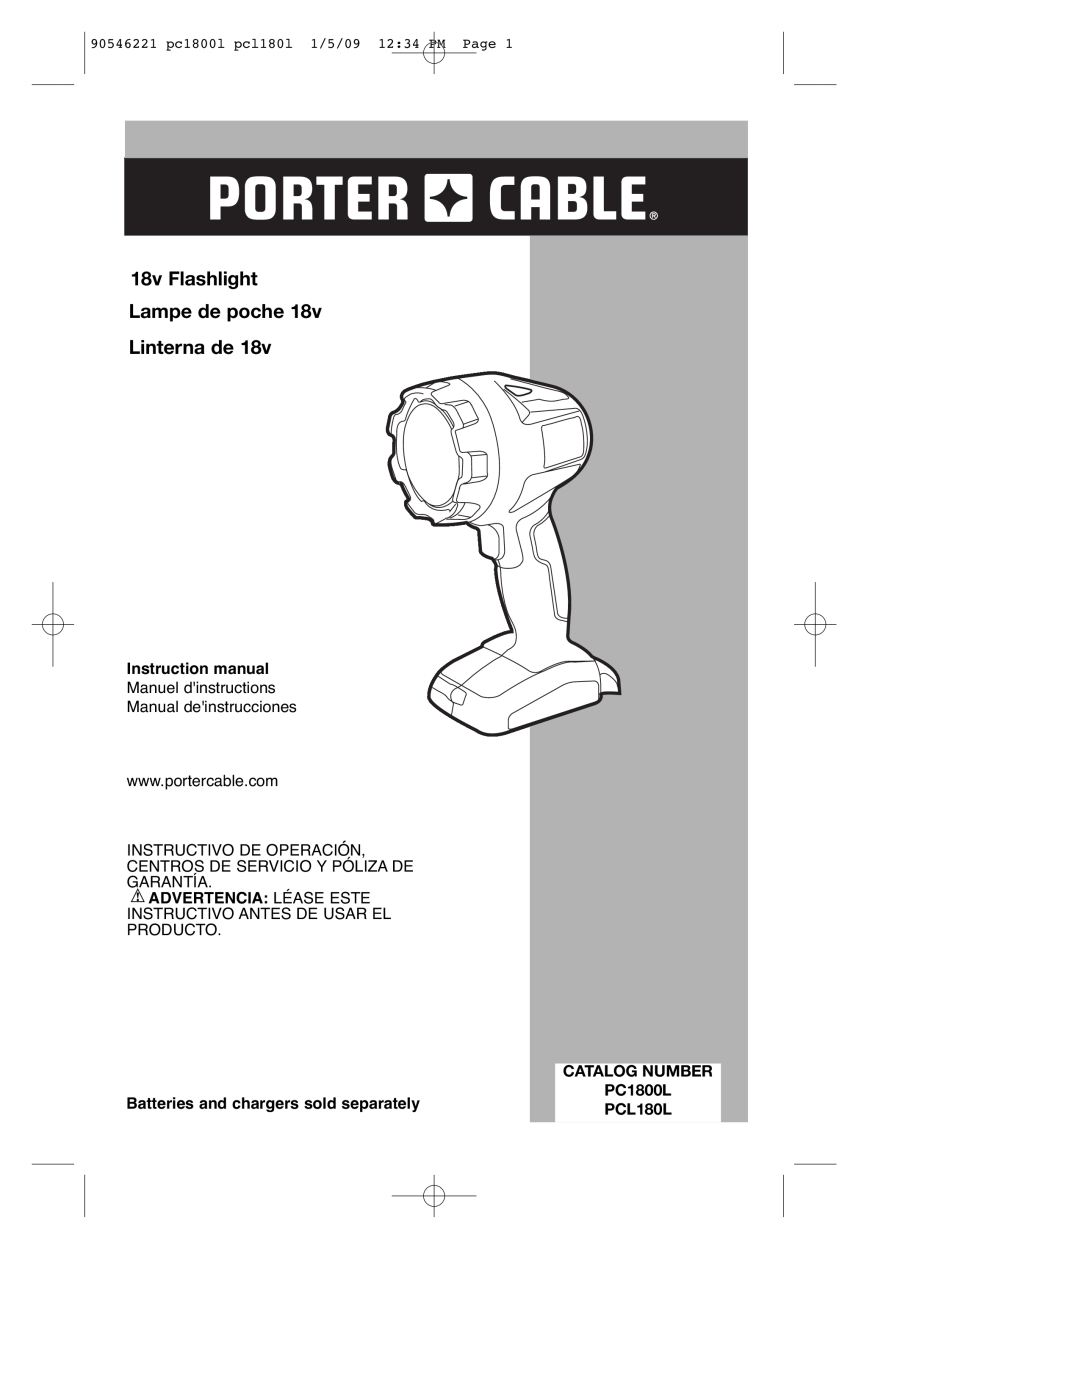 Porter-Cable PCL180L, PC1800L, 90546221 instruction manual 18v Flashlight Lampe de poche Linterna de, Instruction manual 